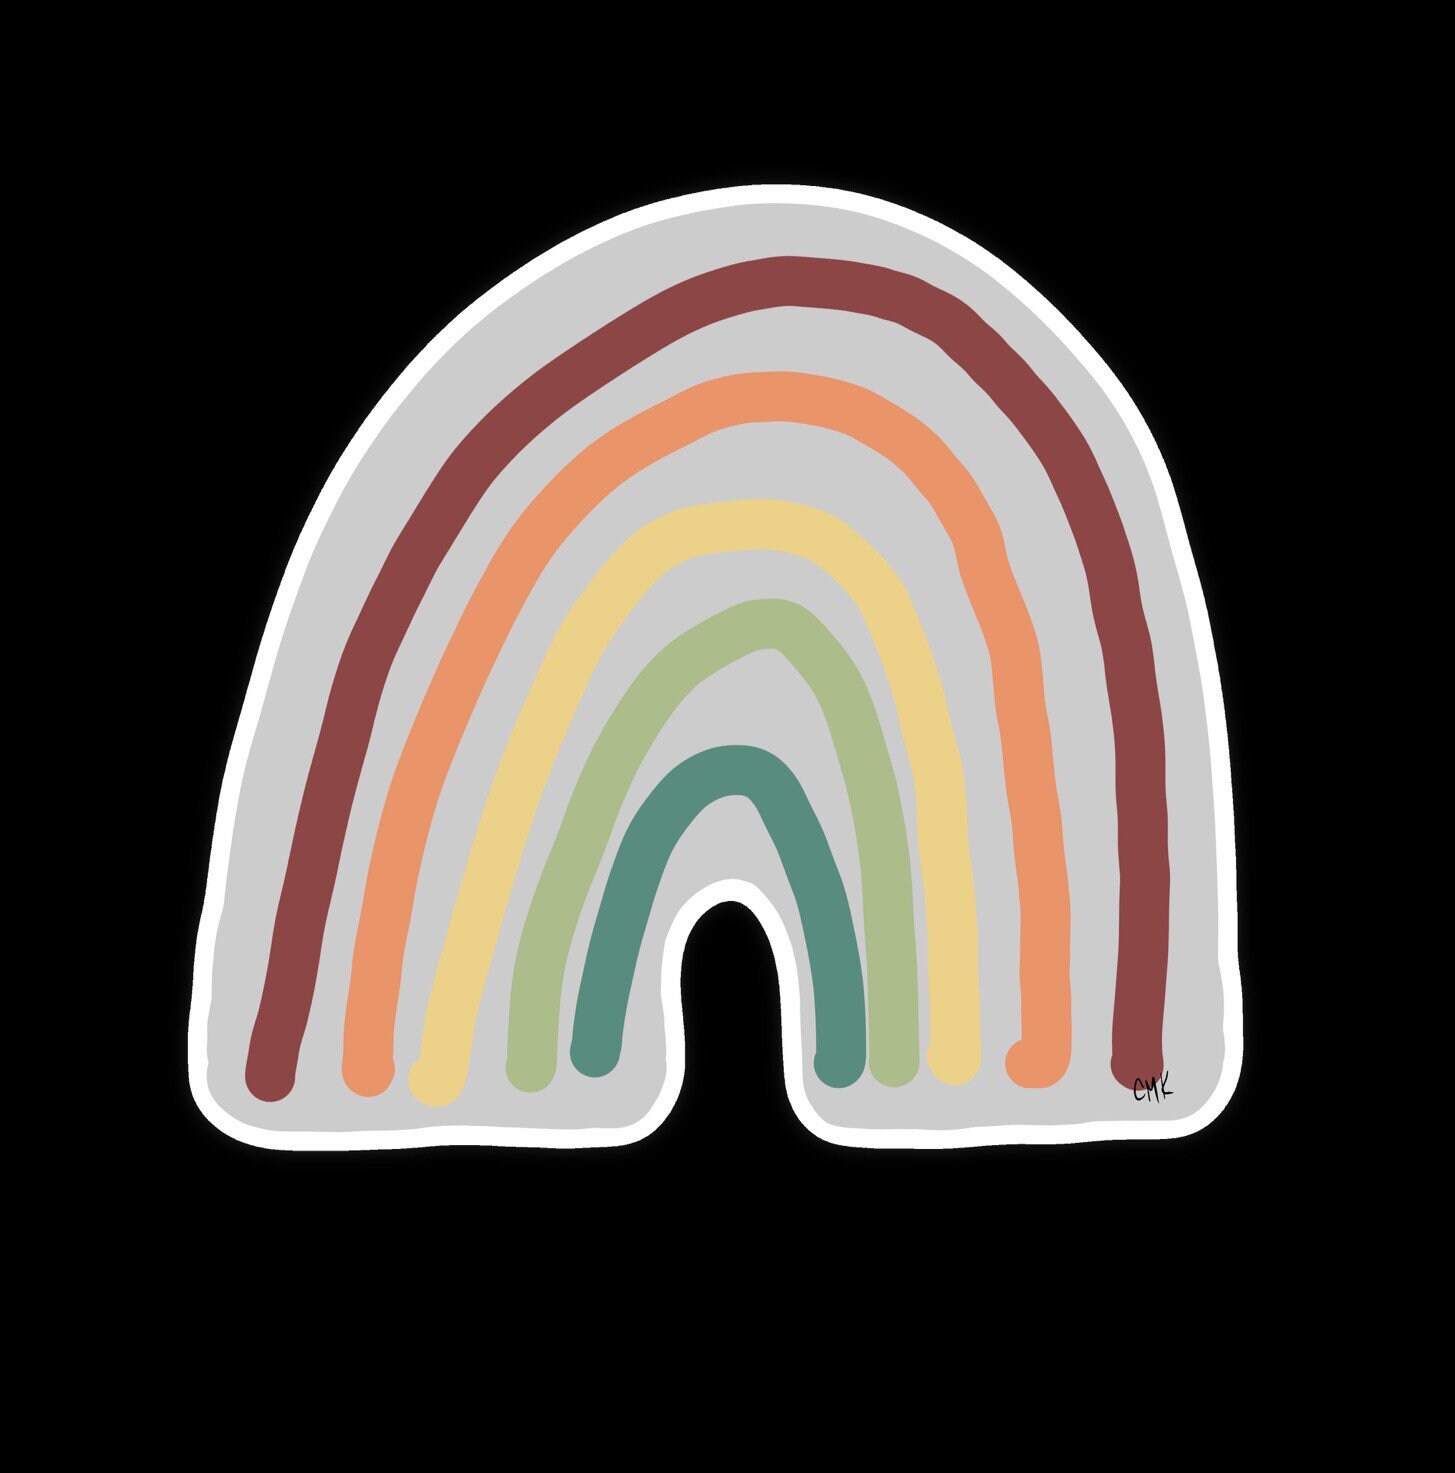 Rainbow Aesthetic Sticker